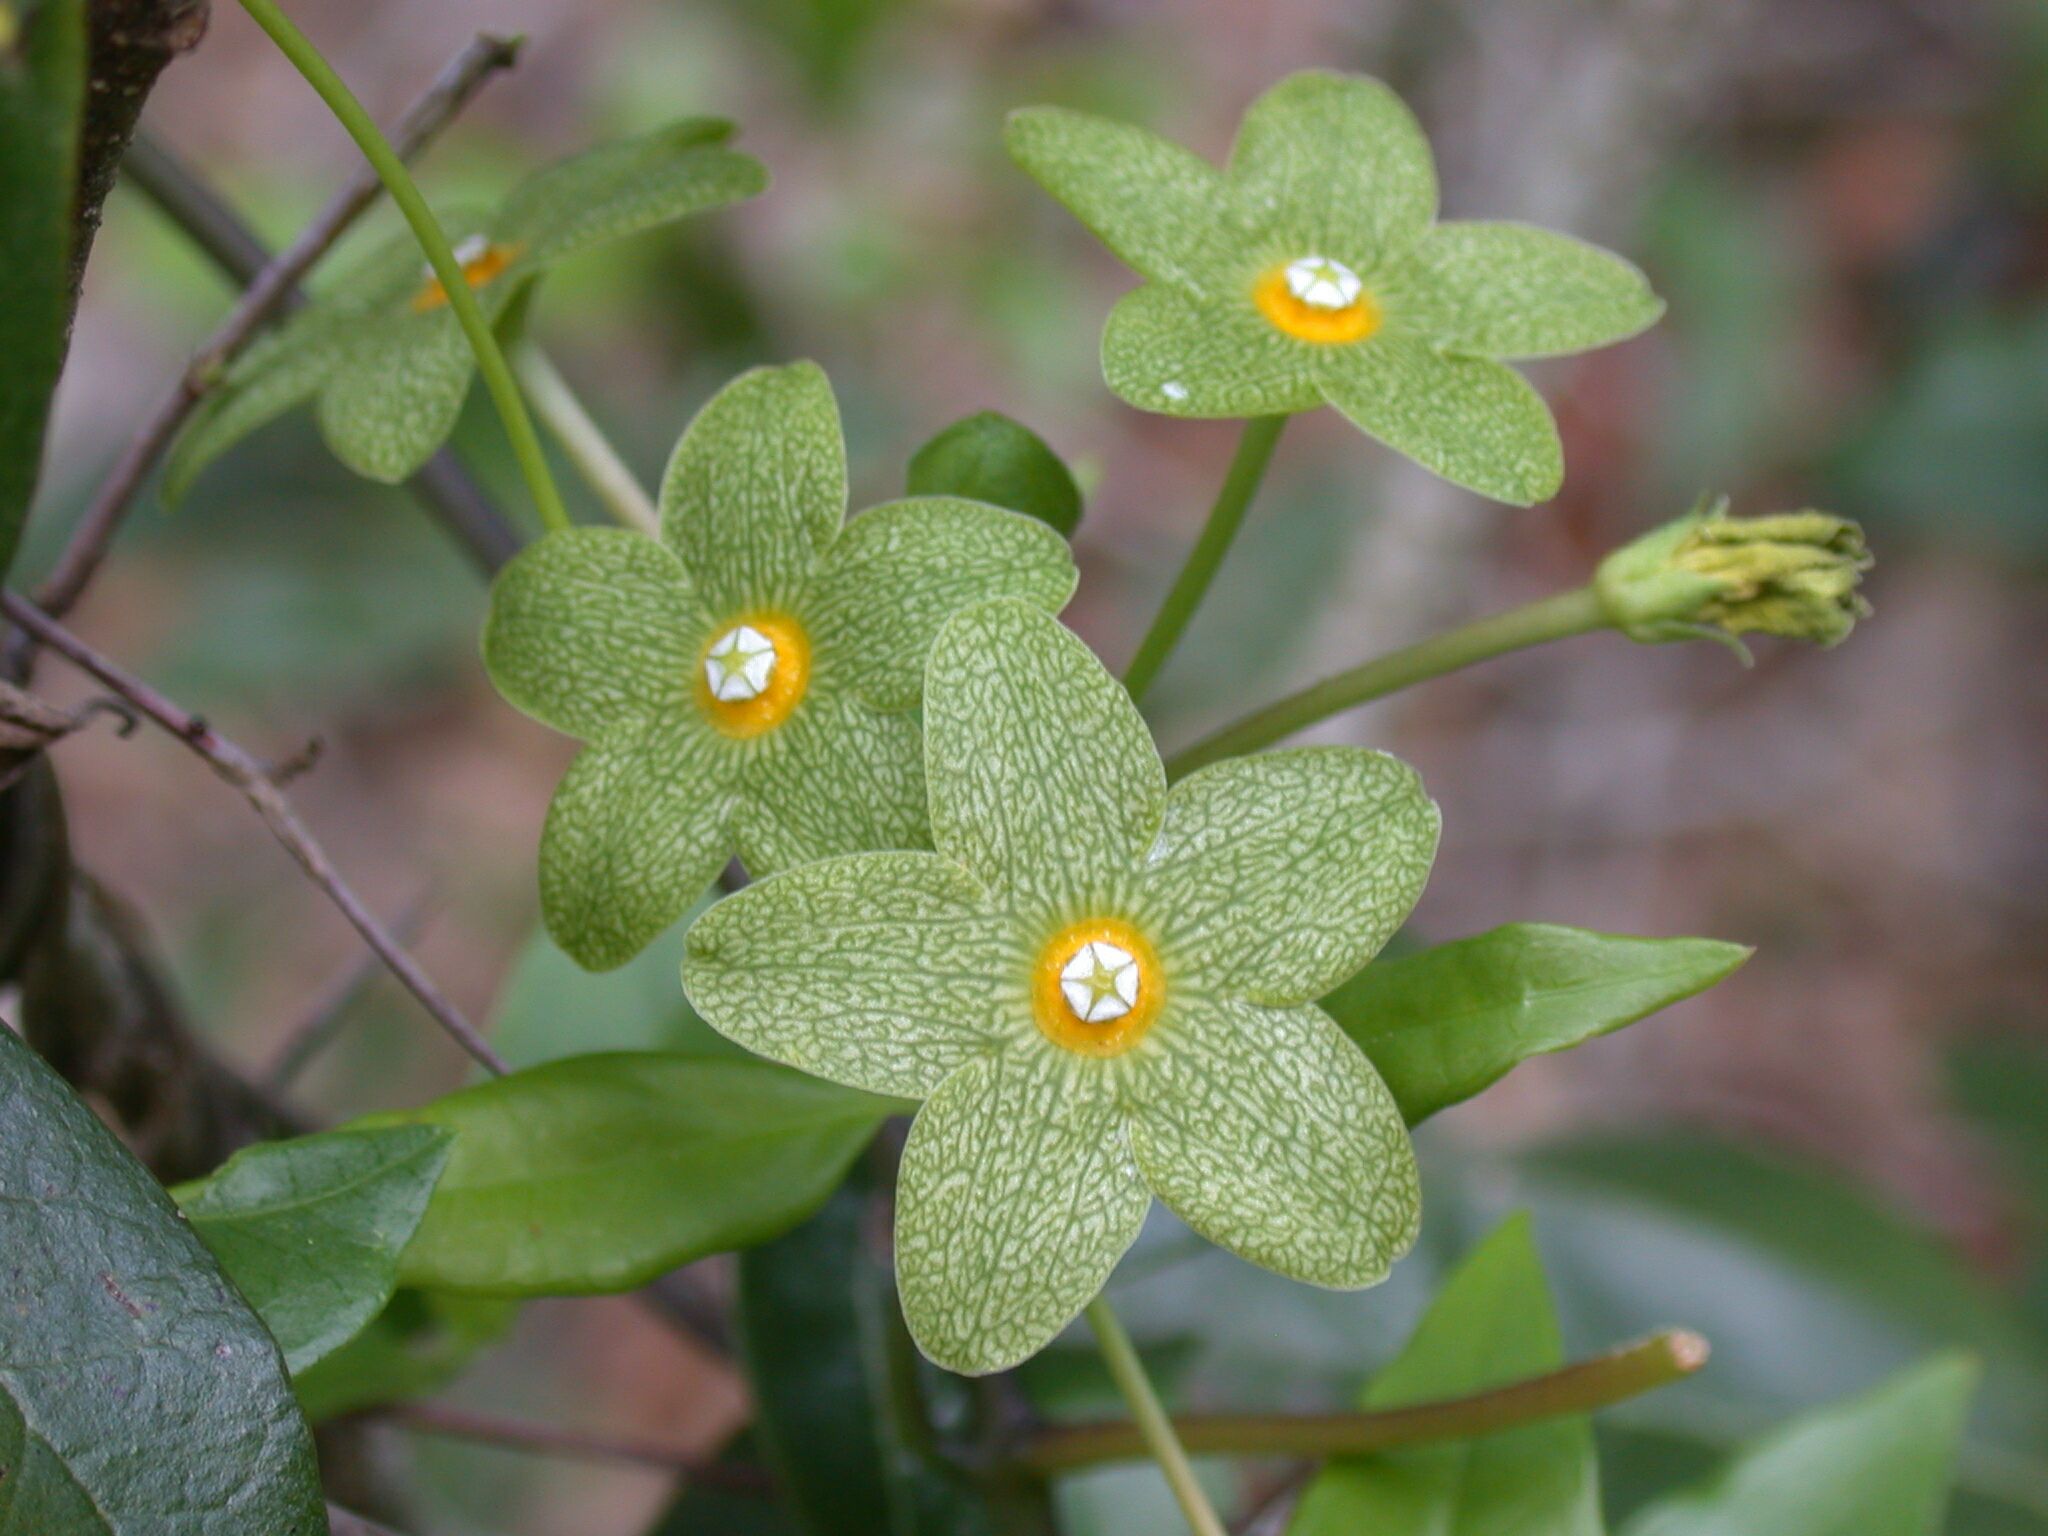 Alabama Milkvine wildflower in bloom at Apalachicola Bluffs and Ravines Preserve.